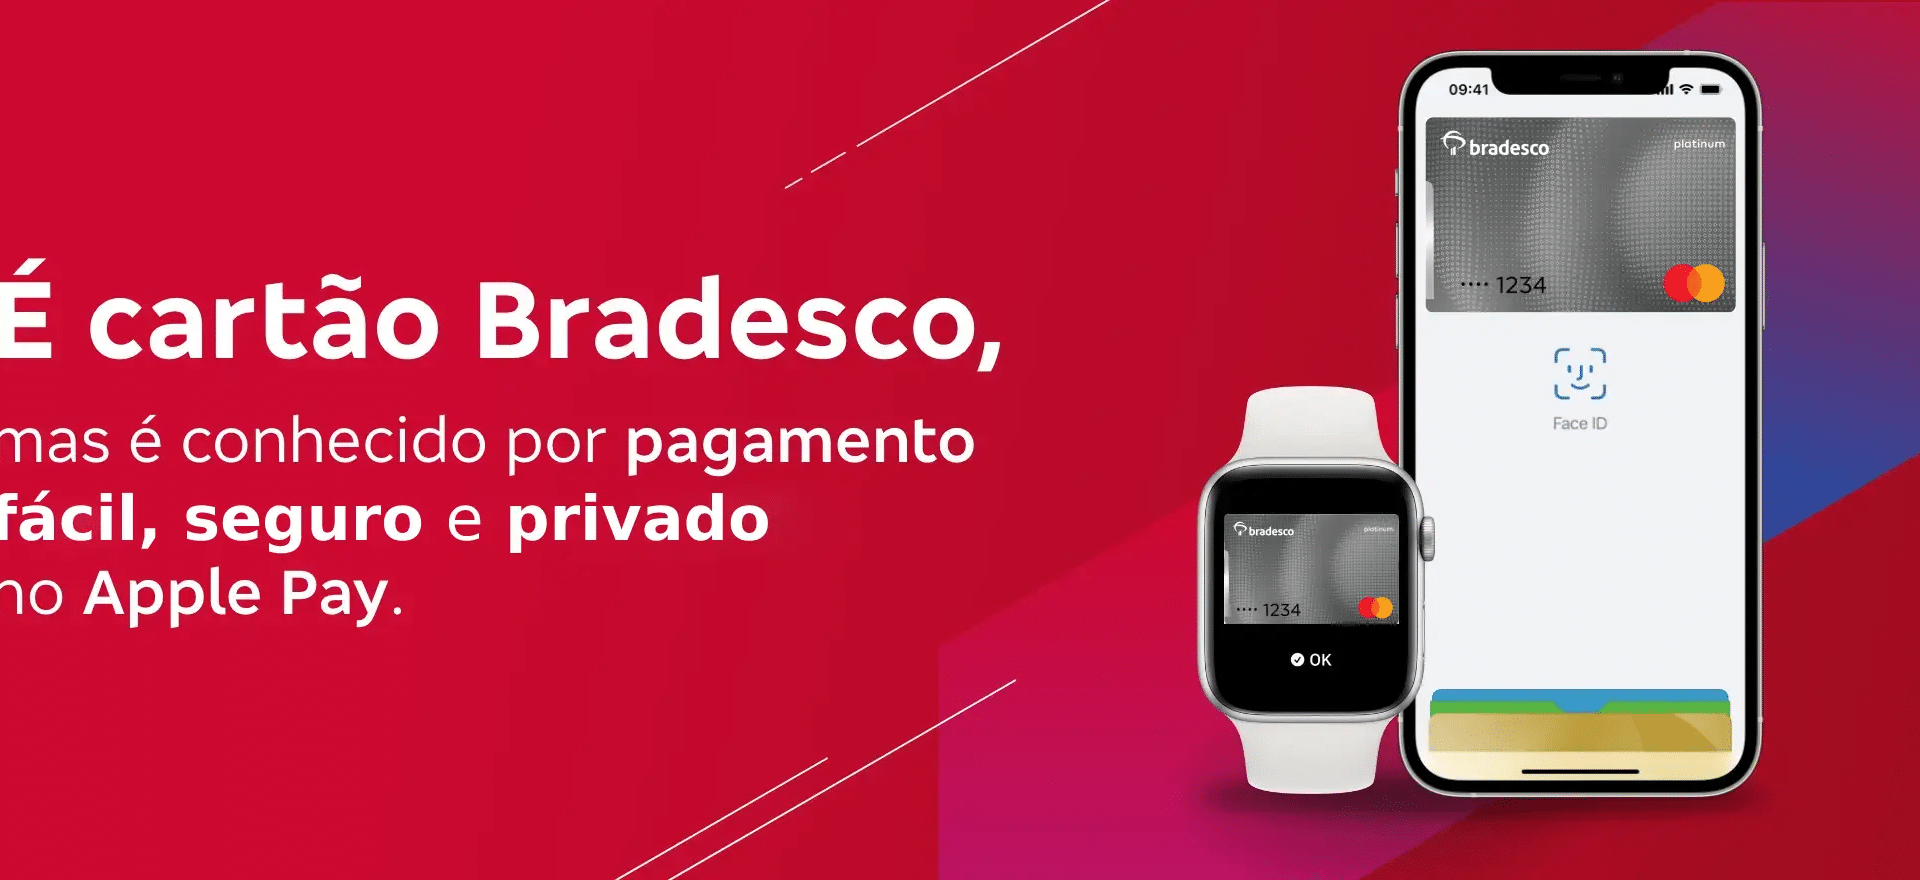 Cartões Bradesco Mastercard no Apple Pay